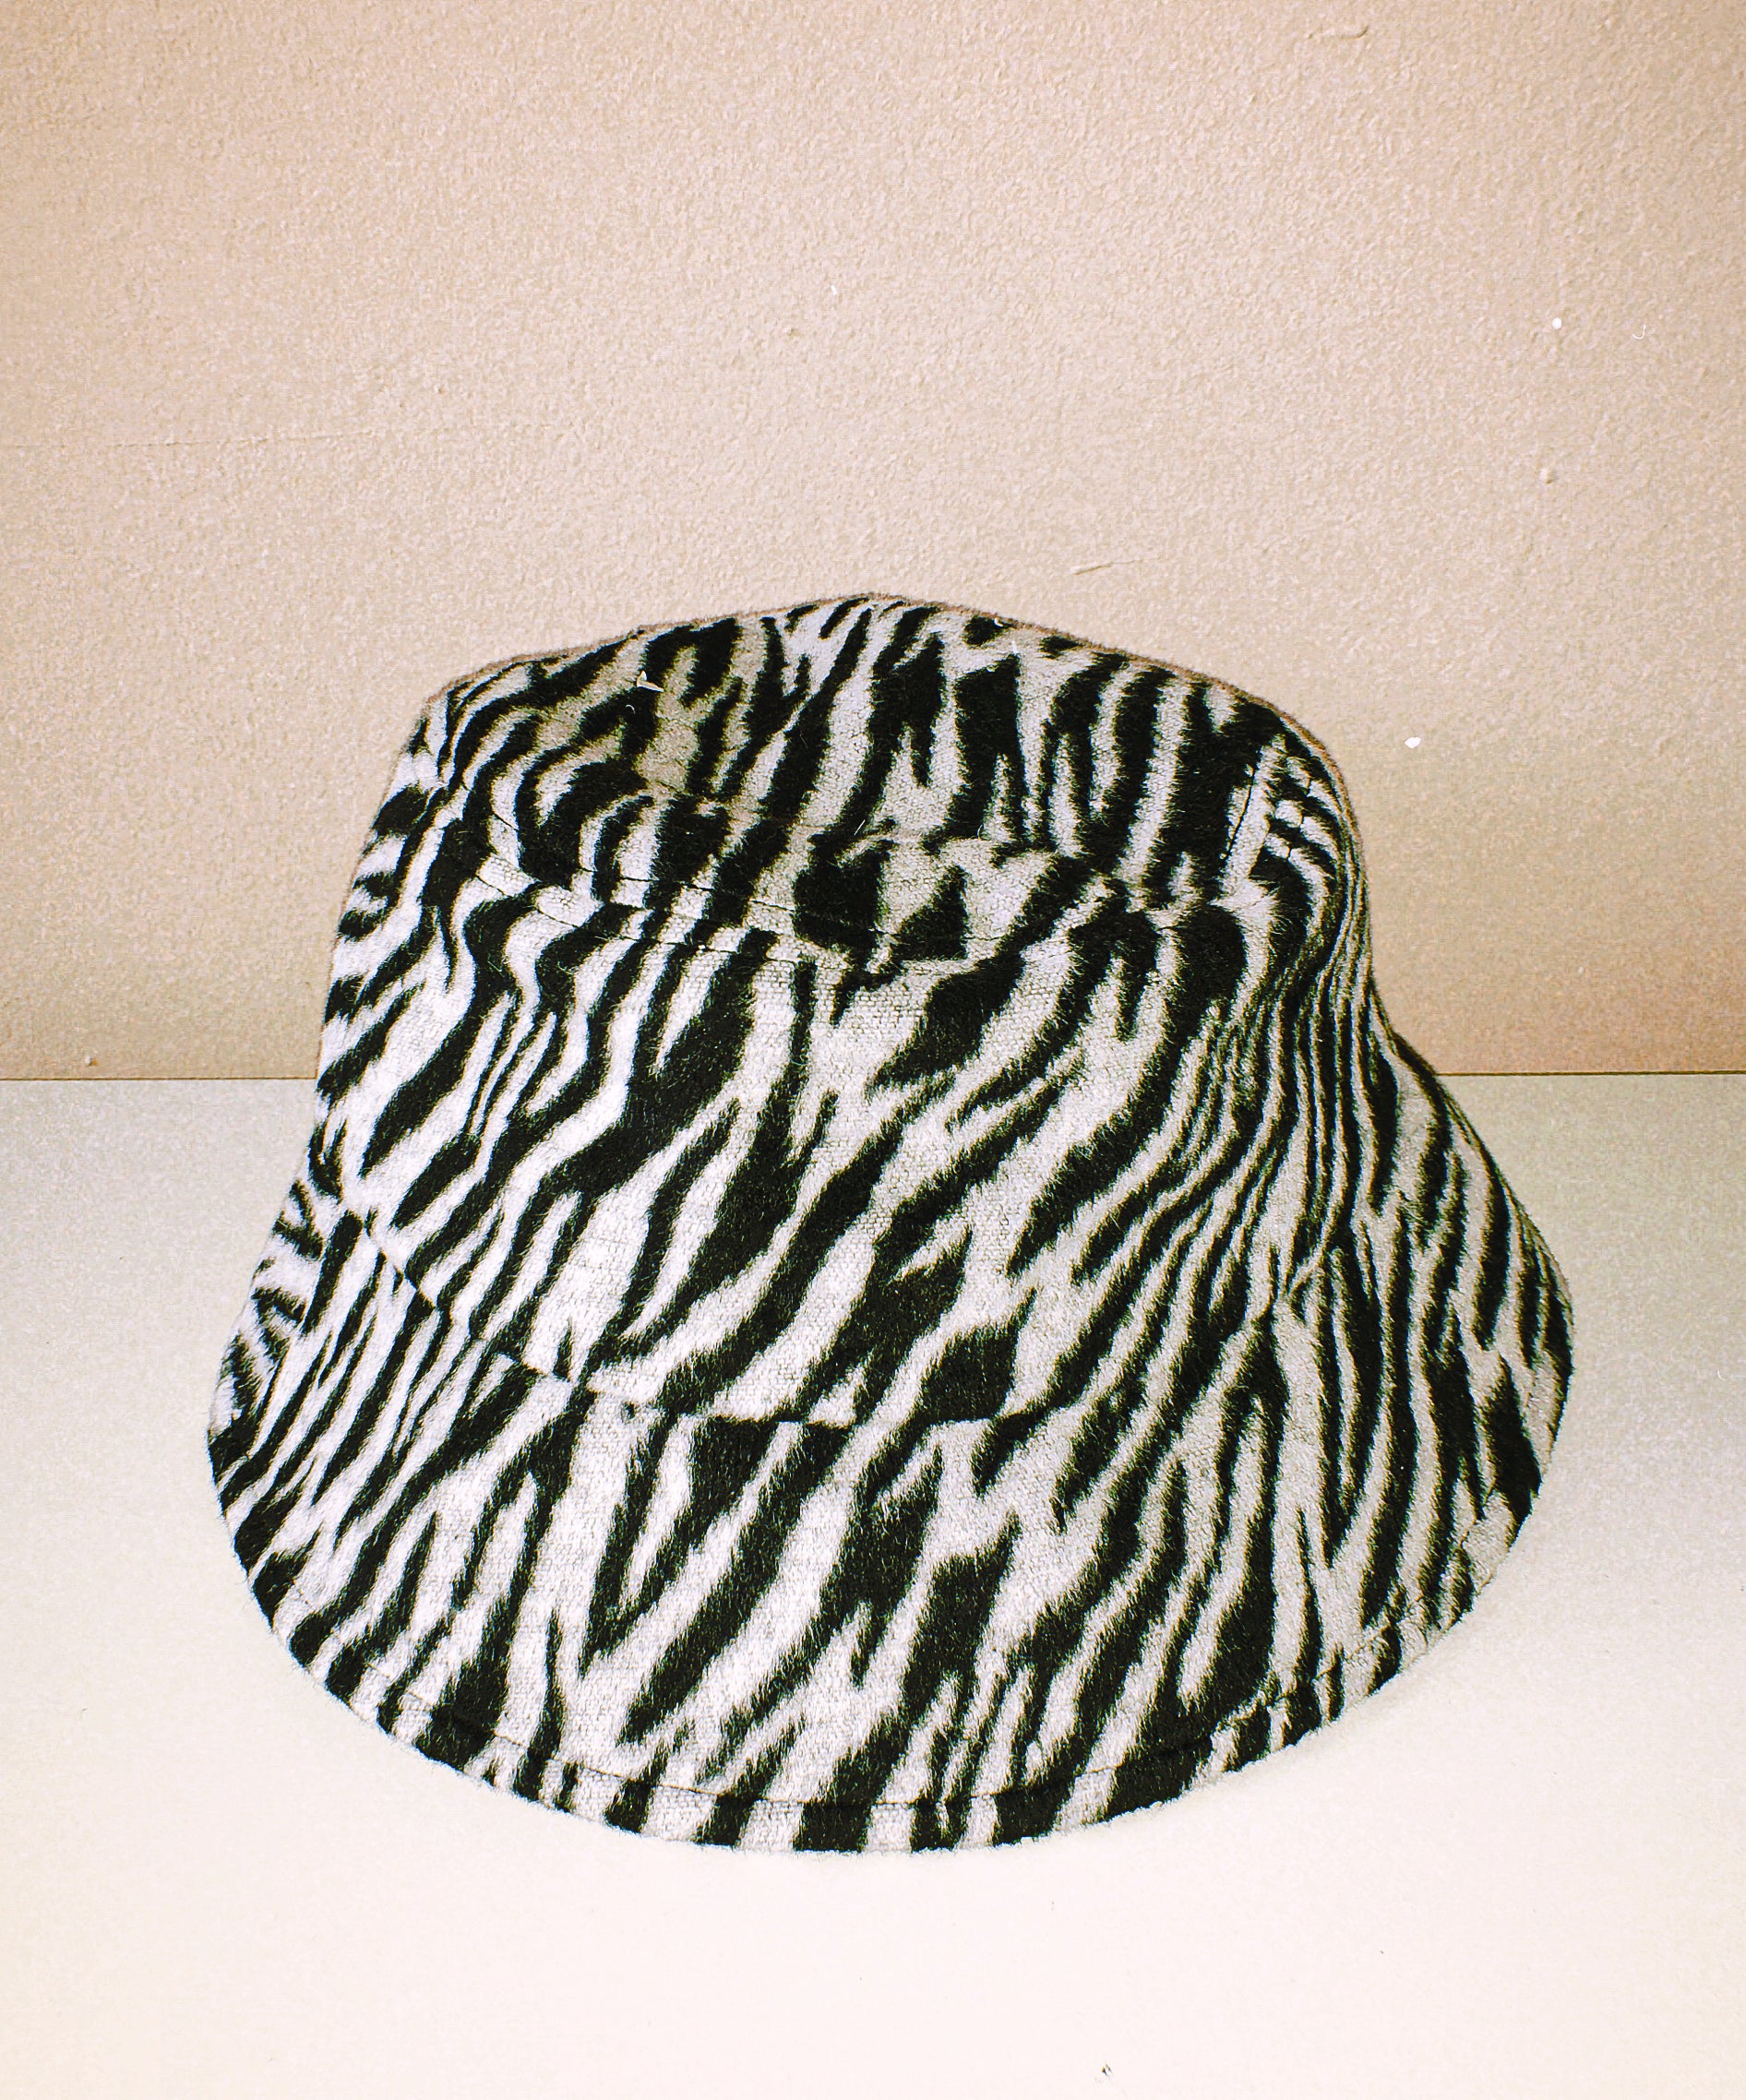 The Zebra Bucket Hat by Veronique